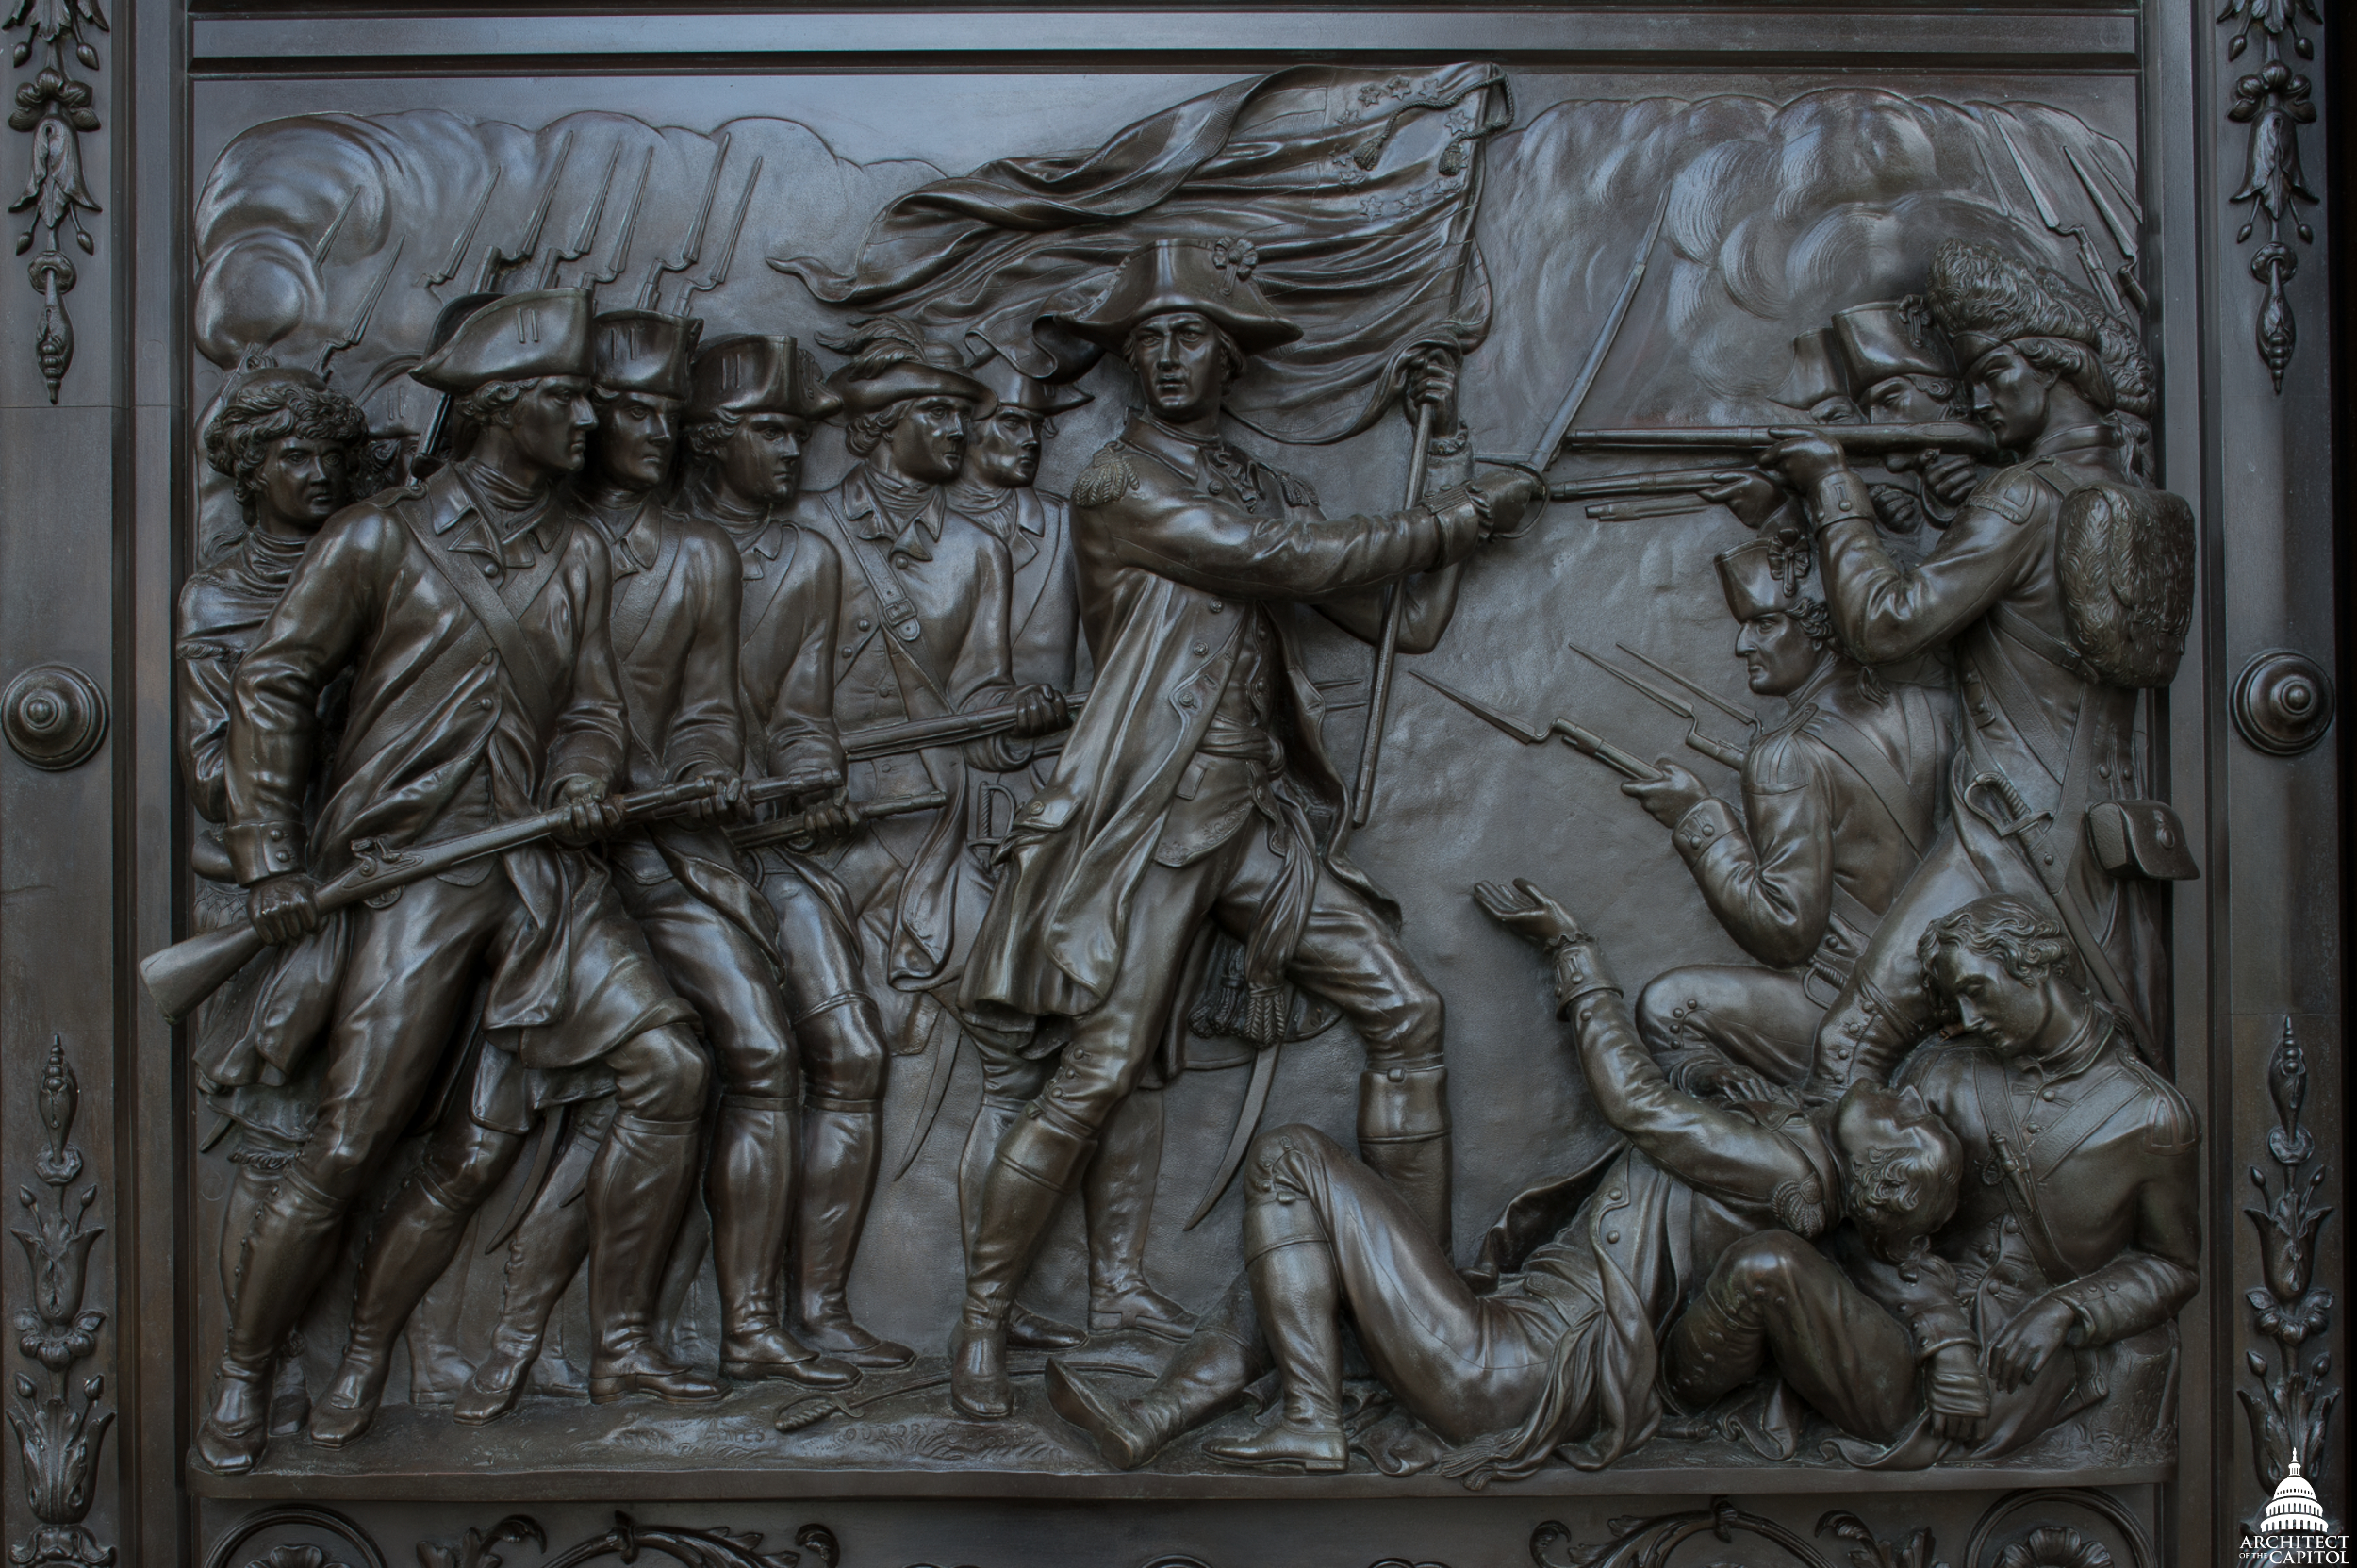 A panel on the Senate Doors featuring Alexander Hamilton at the Battle of Yorktown.